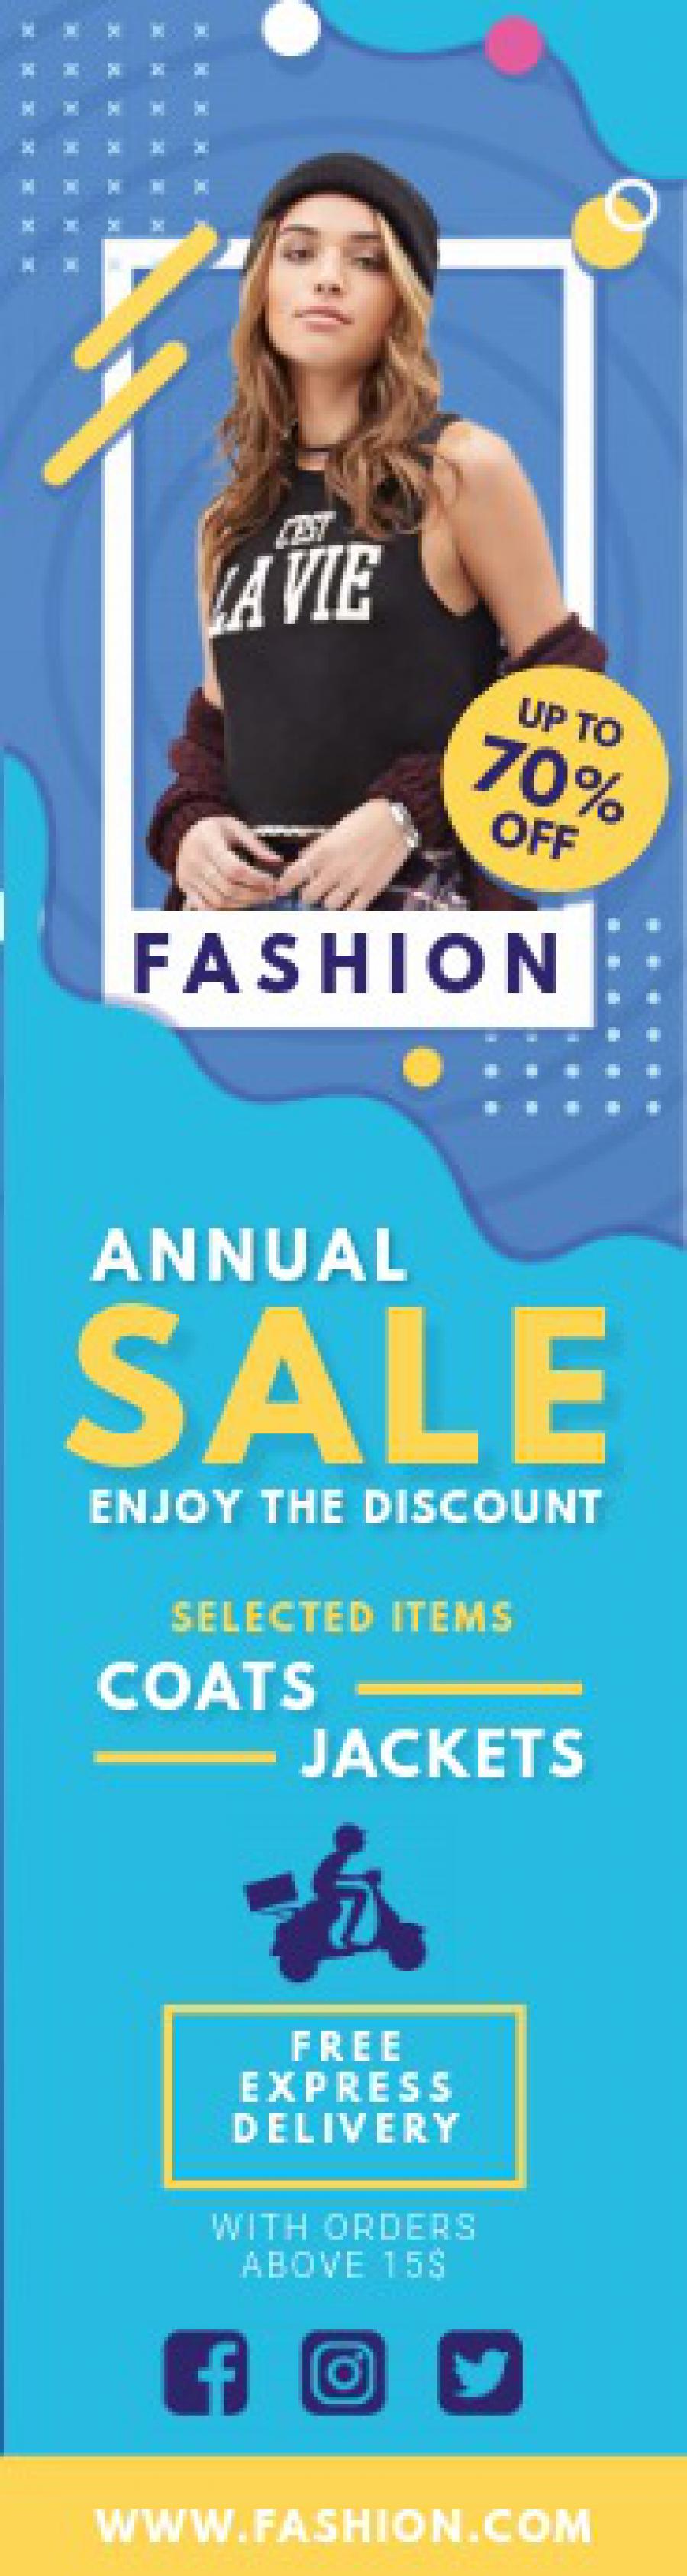 Annual Fashion Sale